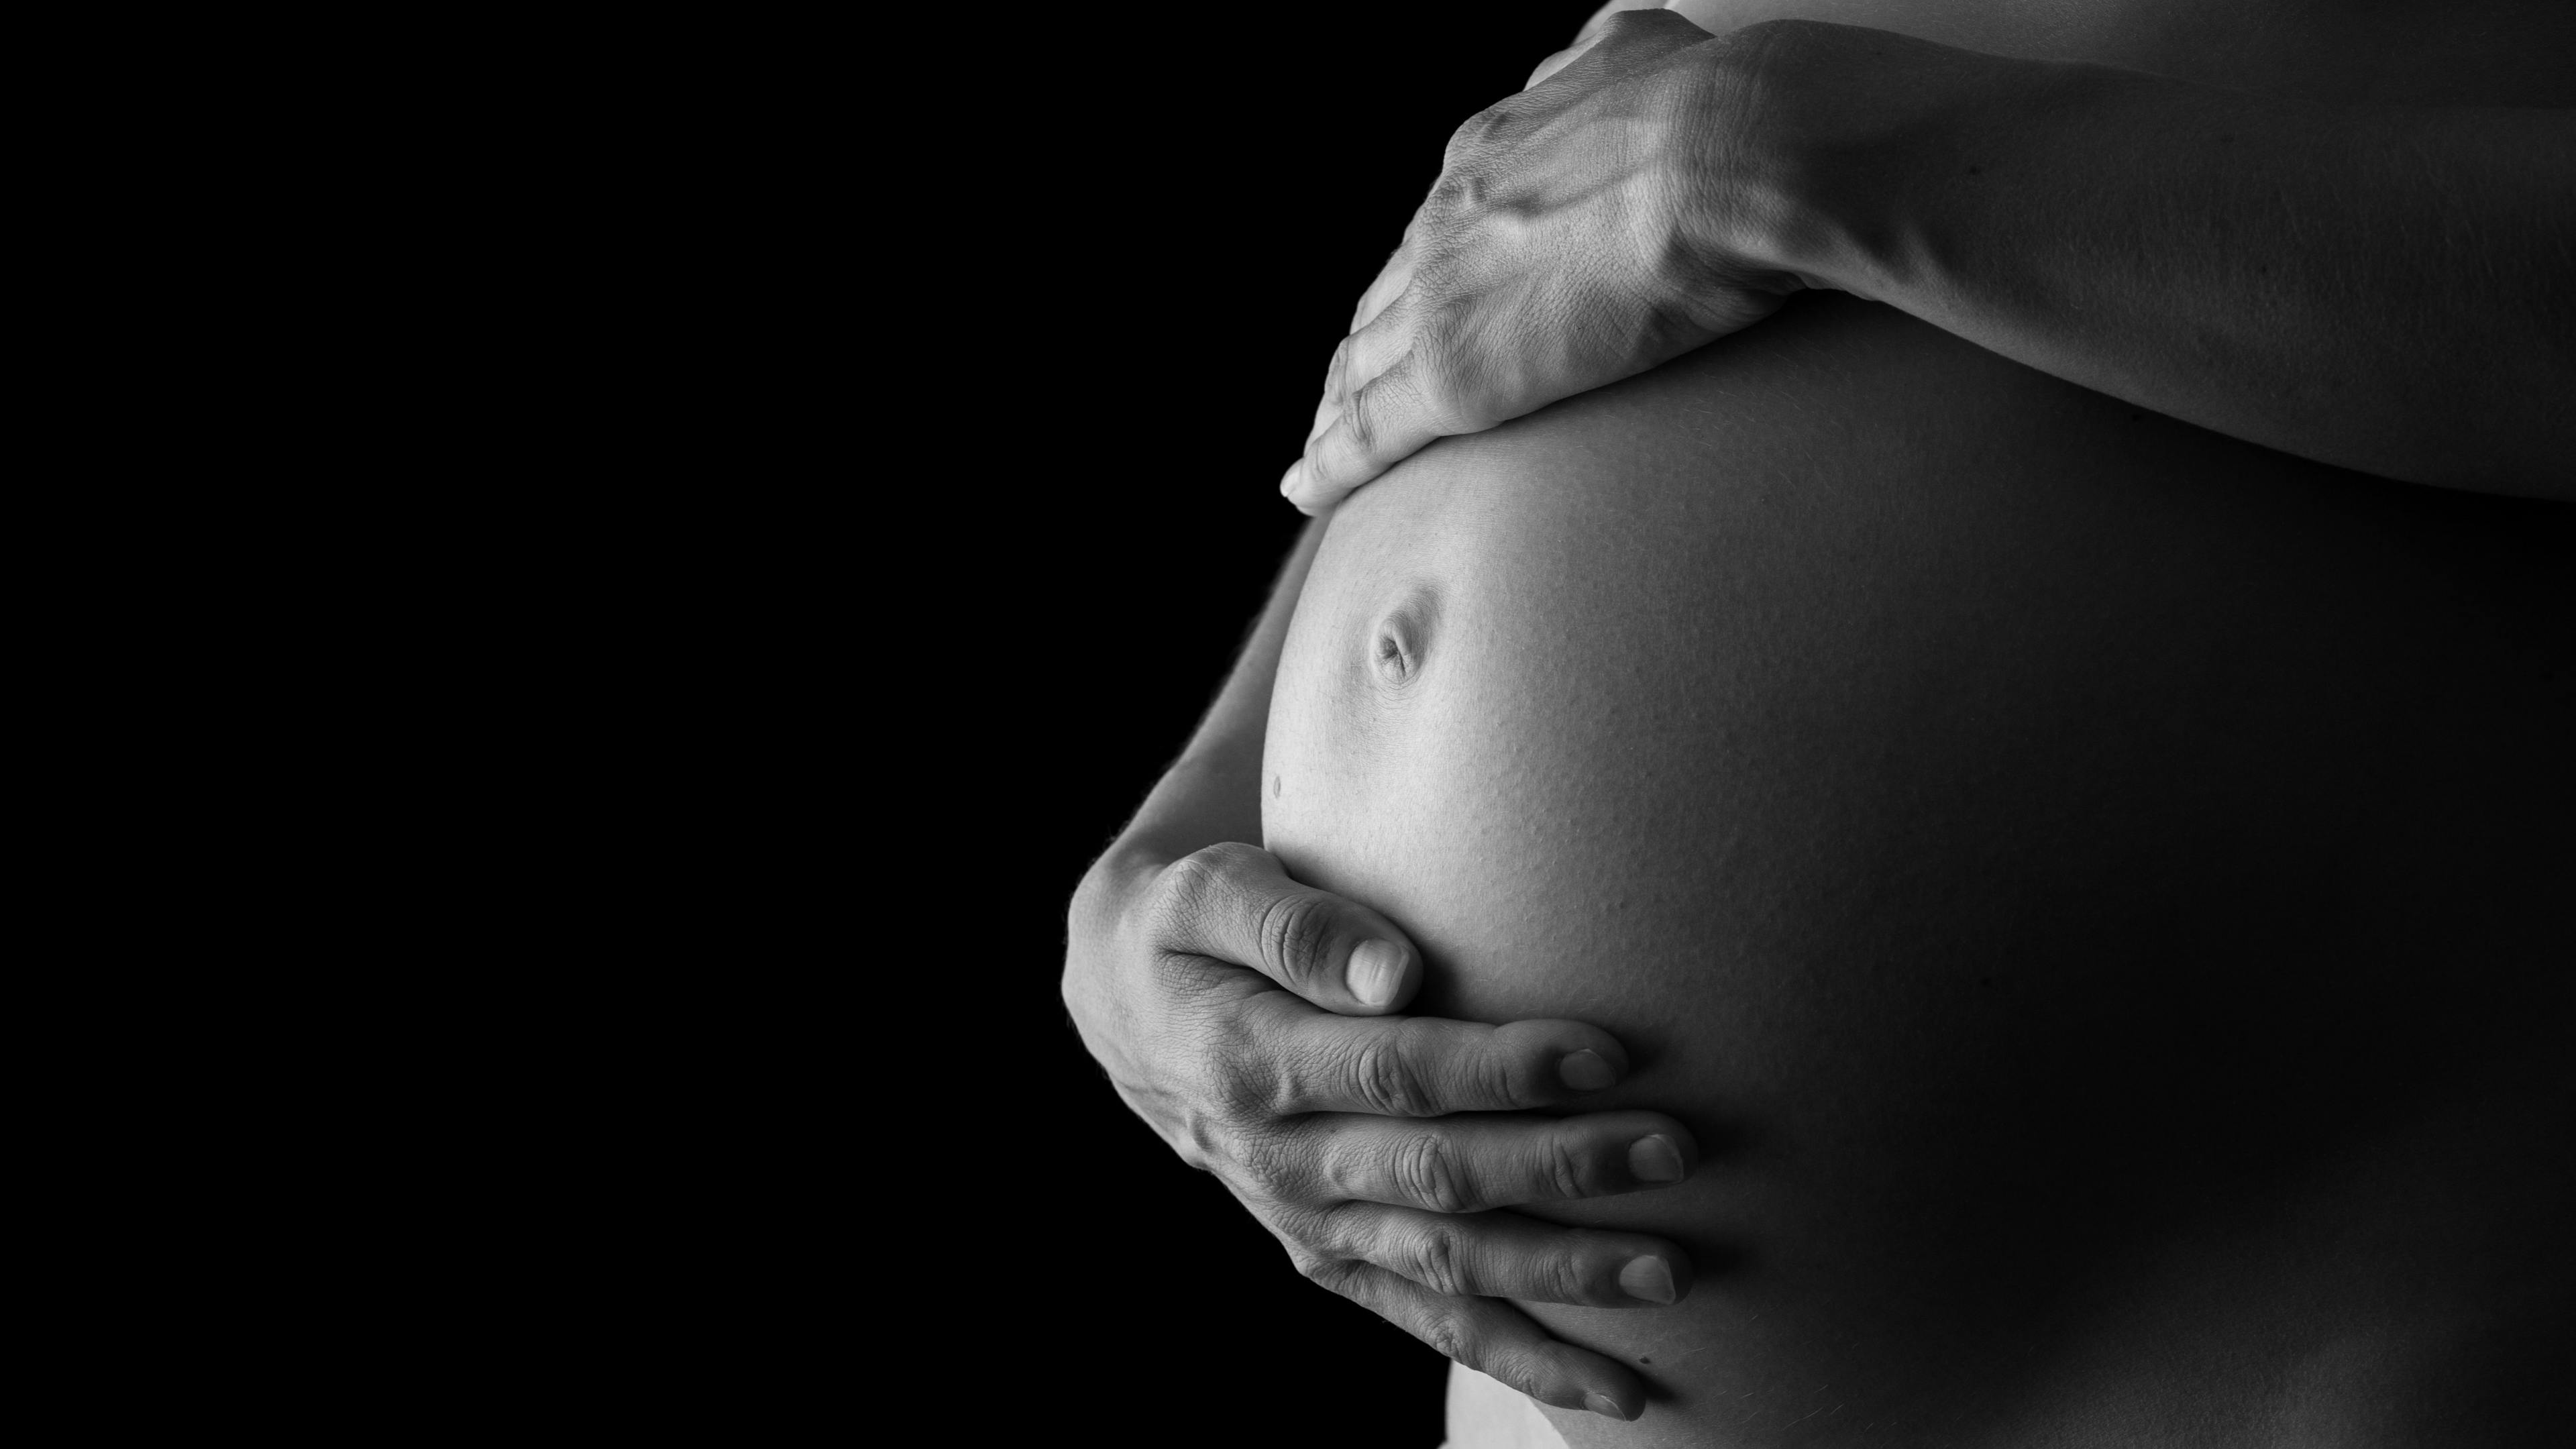 Tender Pregnancy | Image Credit: Gajus - stock.adobe.com